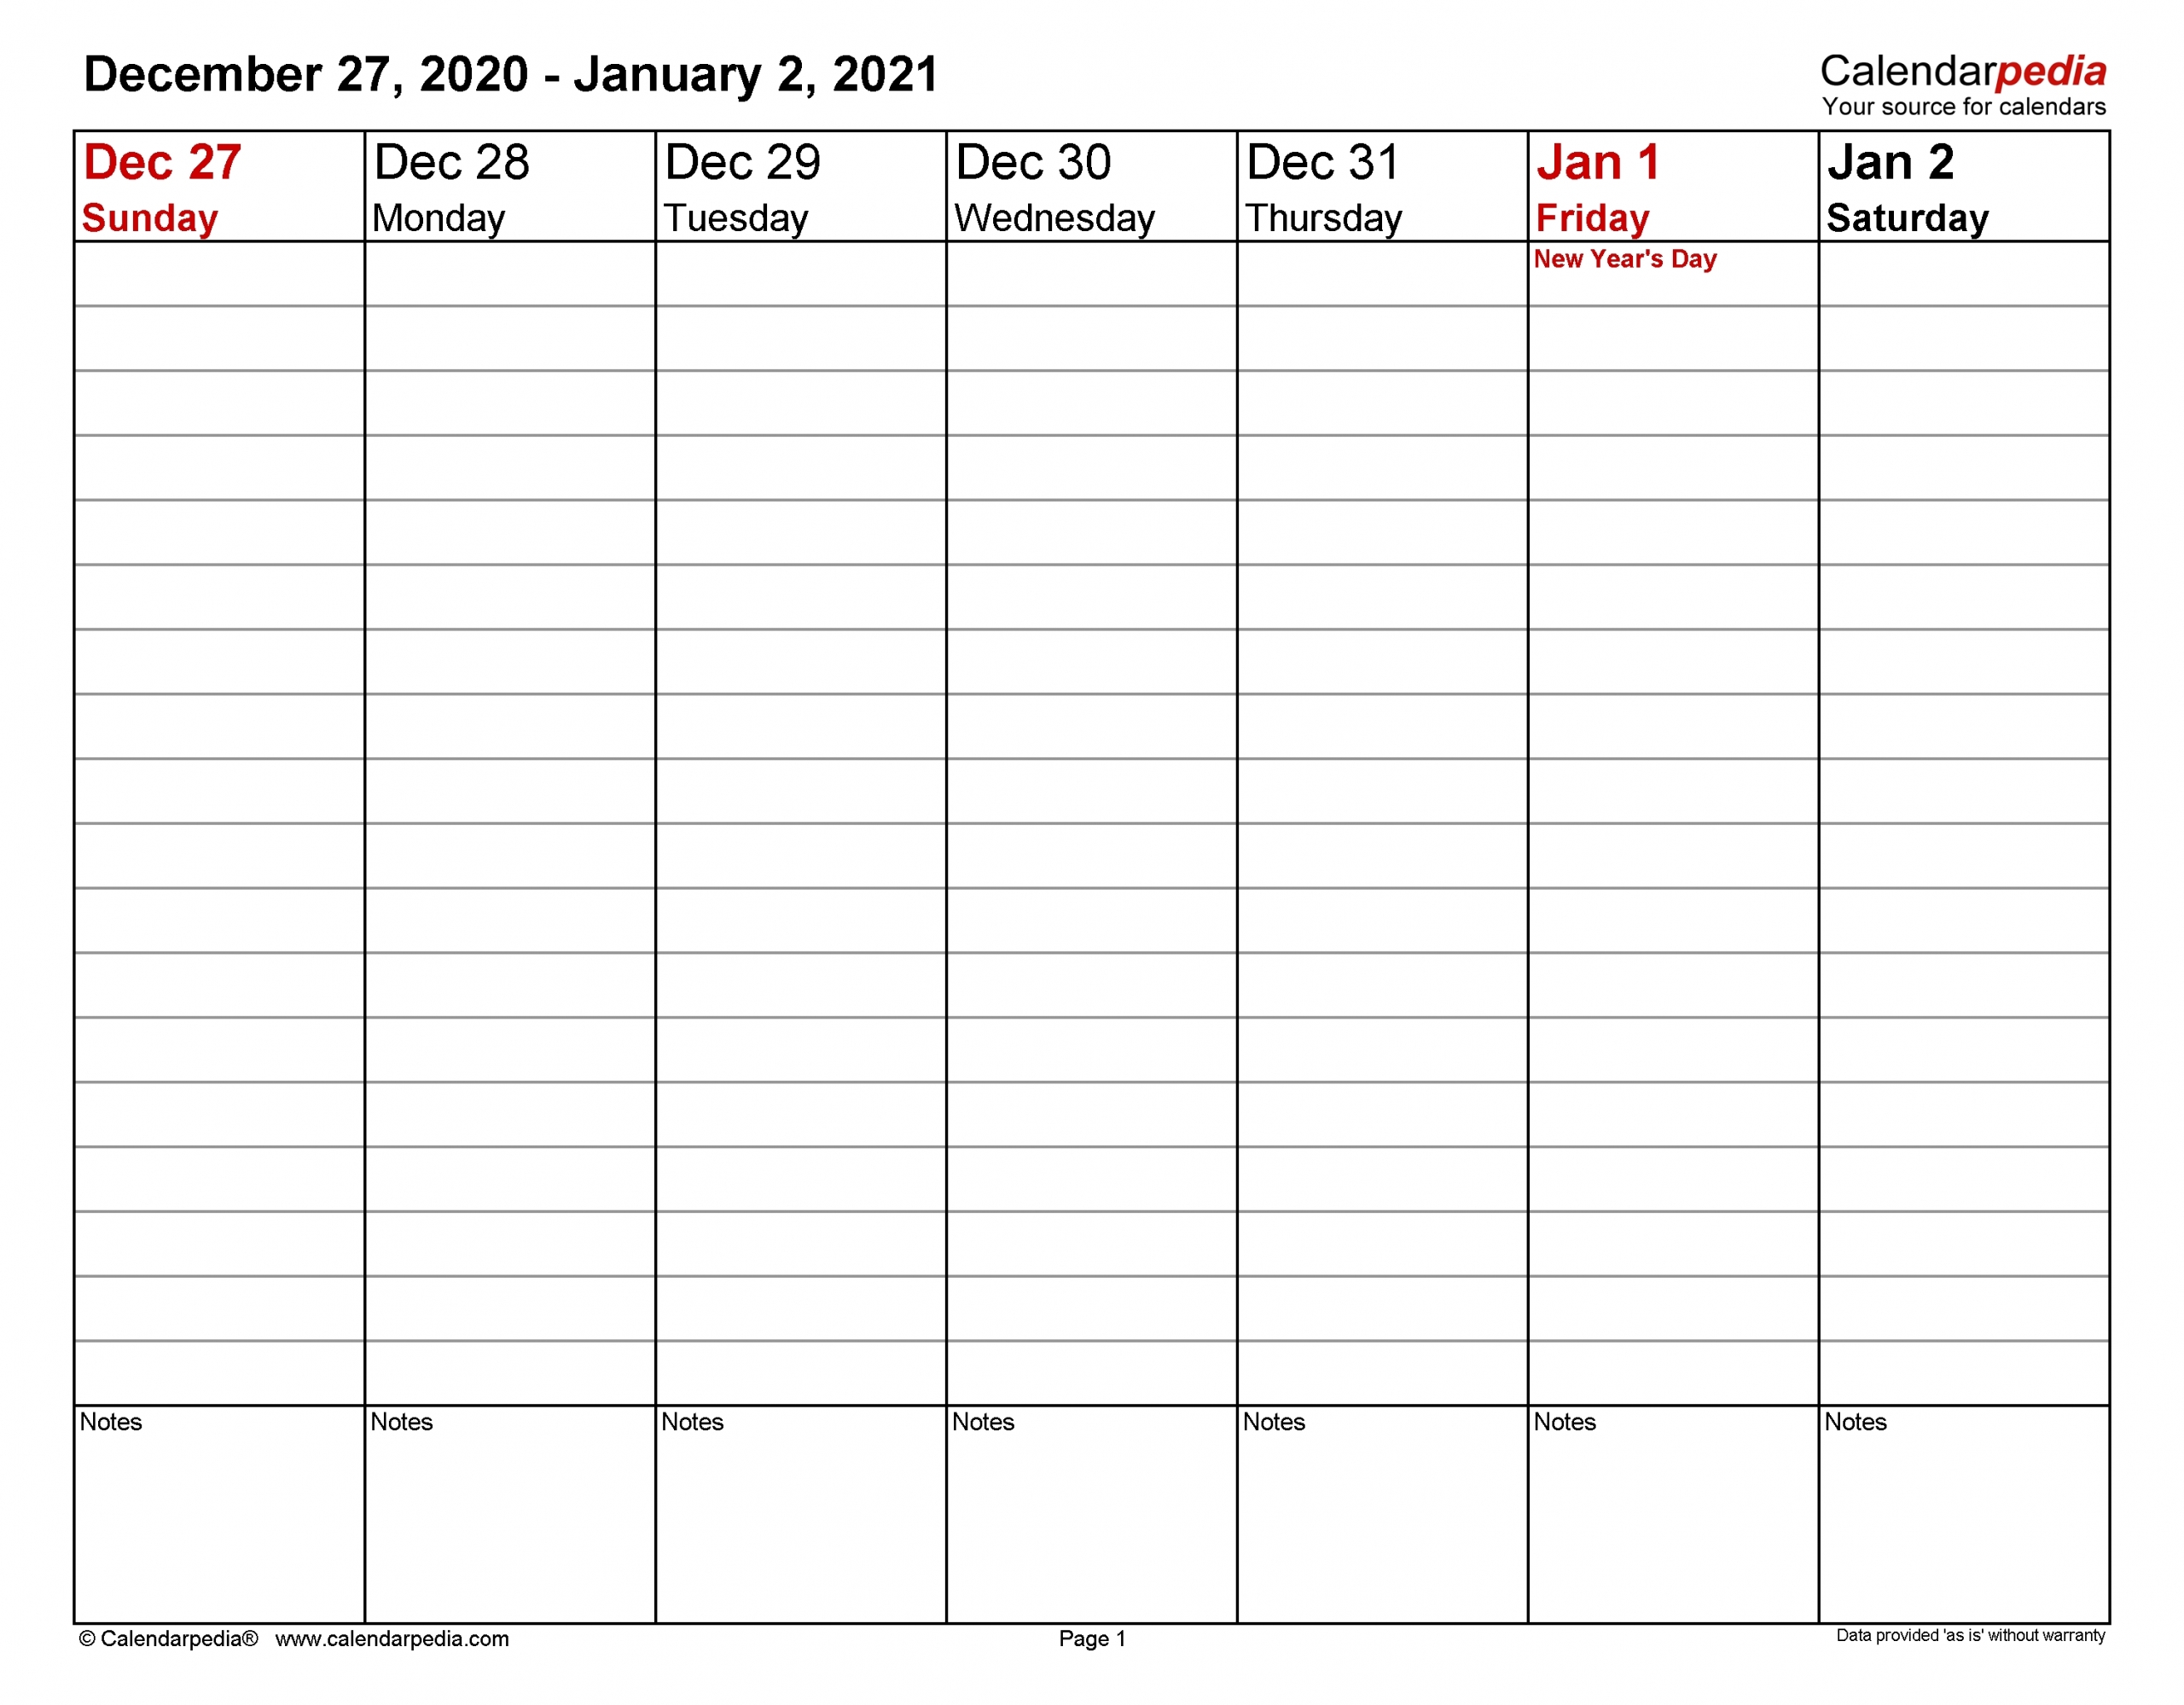 Free Printable Weekly Calendar With Time Slots 2021 | Excel-2021 Calendar With Time Slots